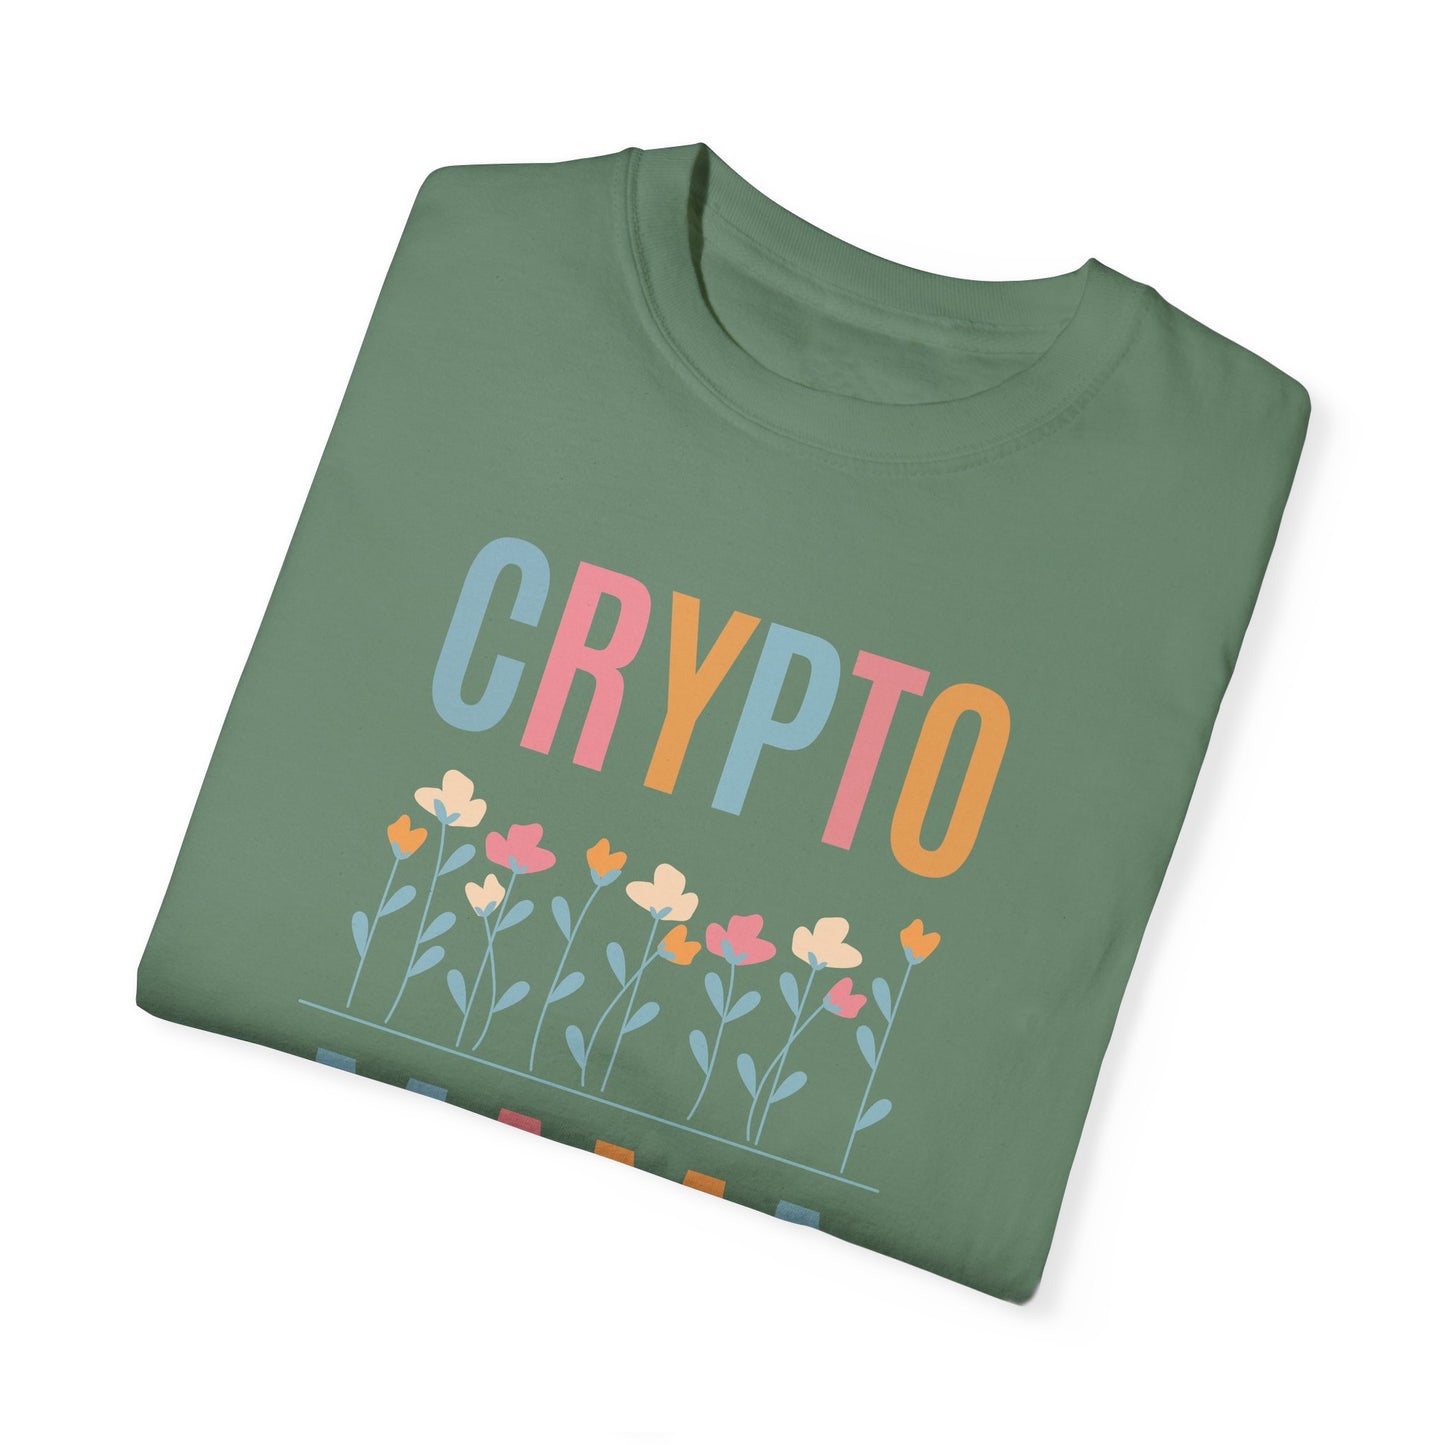 Crypto Mama Comfort Colors 1717 T-shirt